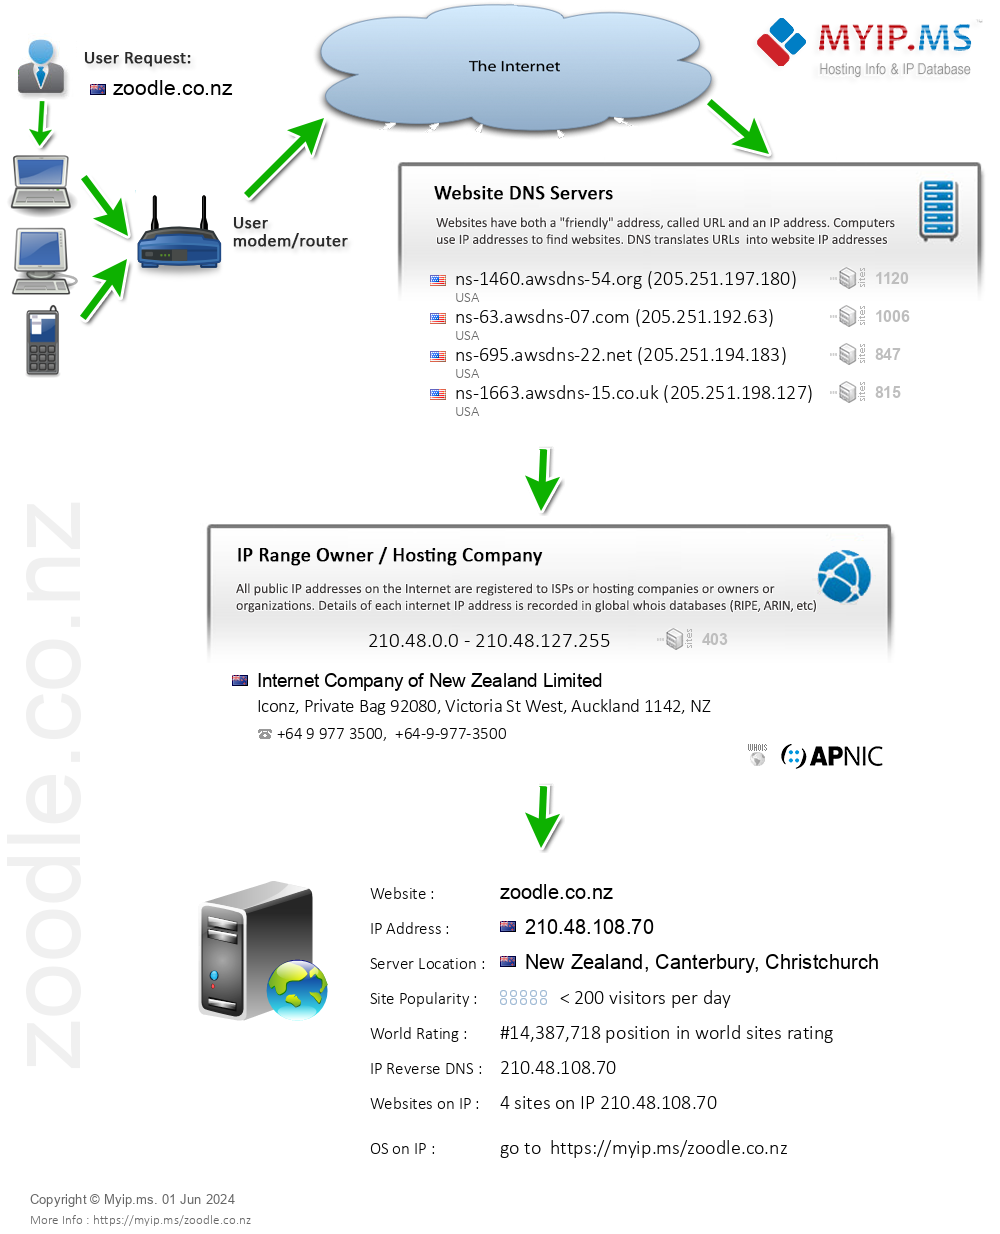 Zoodle.co.nz - Website Hosting Visual IP Diagram